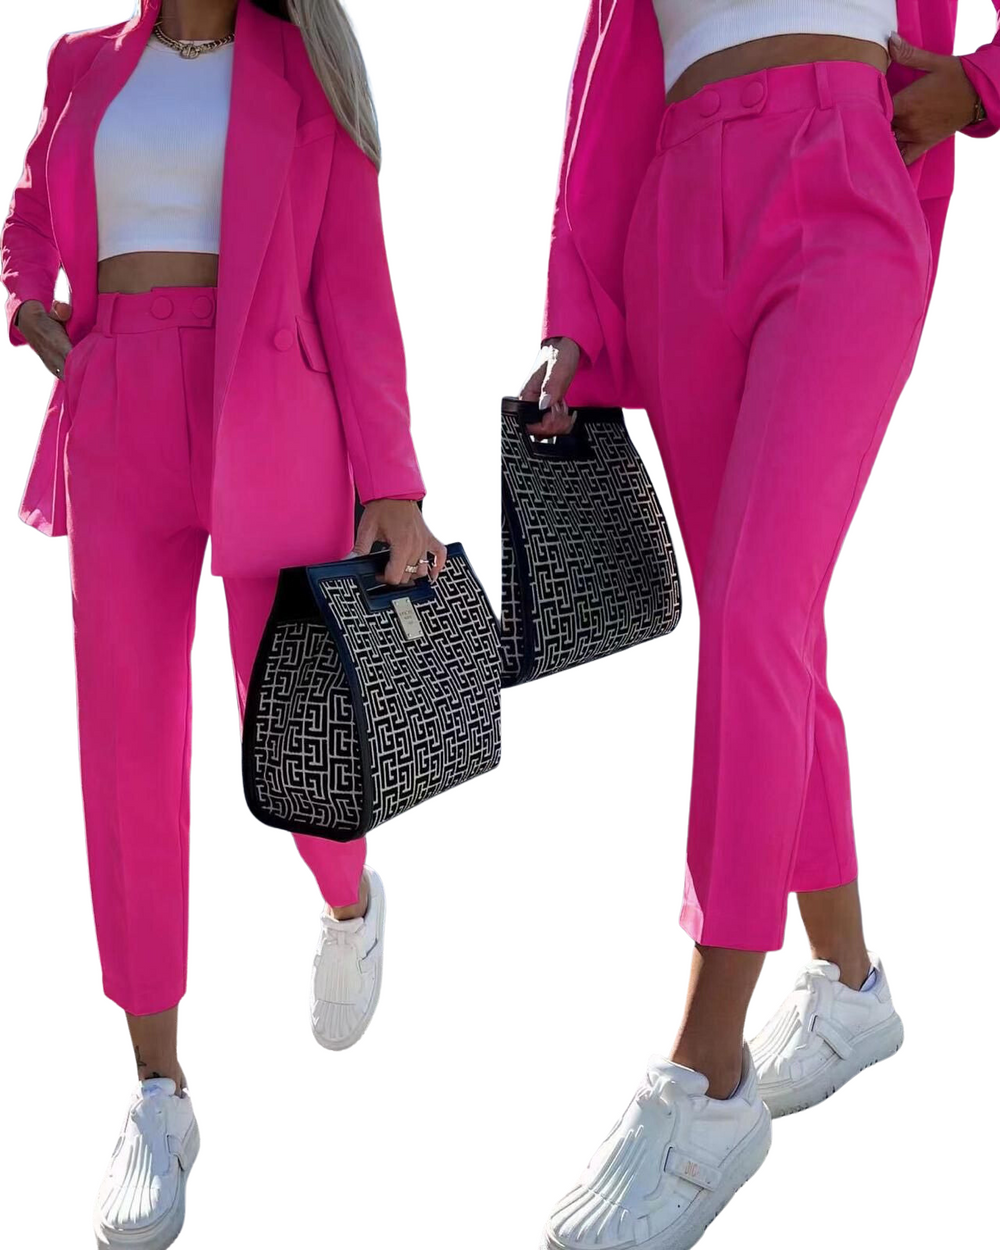 Completo tailleur rosa pesca Atmosphere giacca con revers e